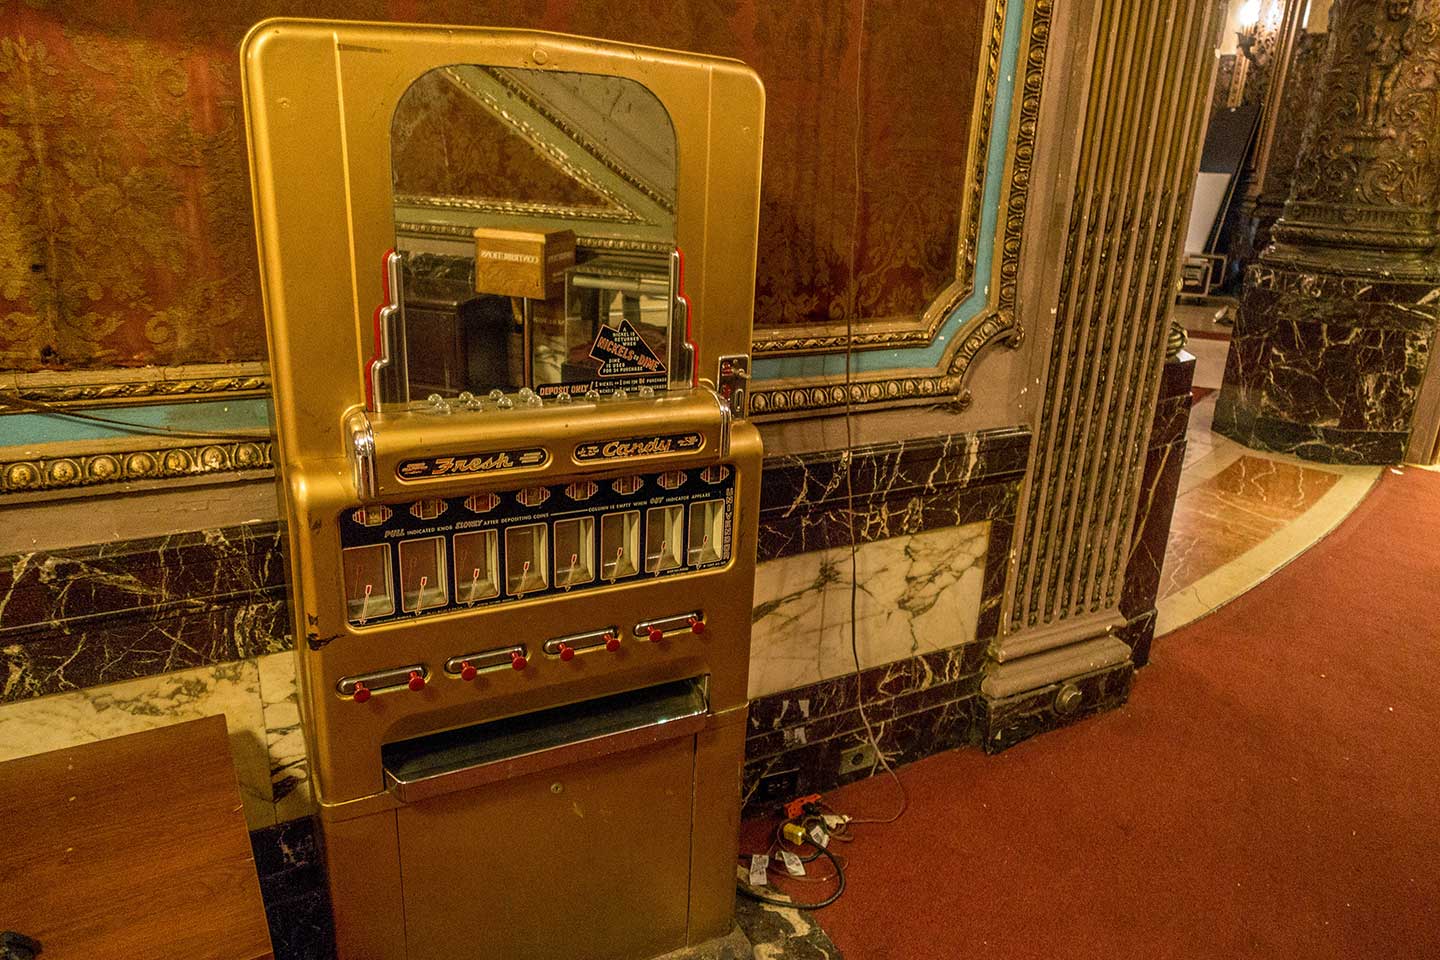 loews theatre journal square candy machine